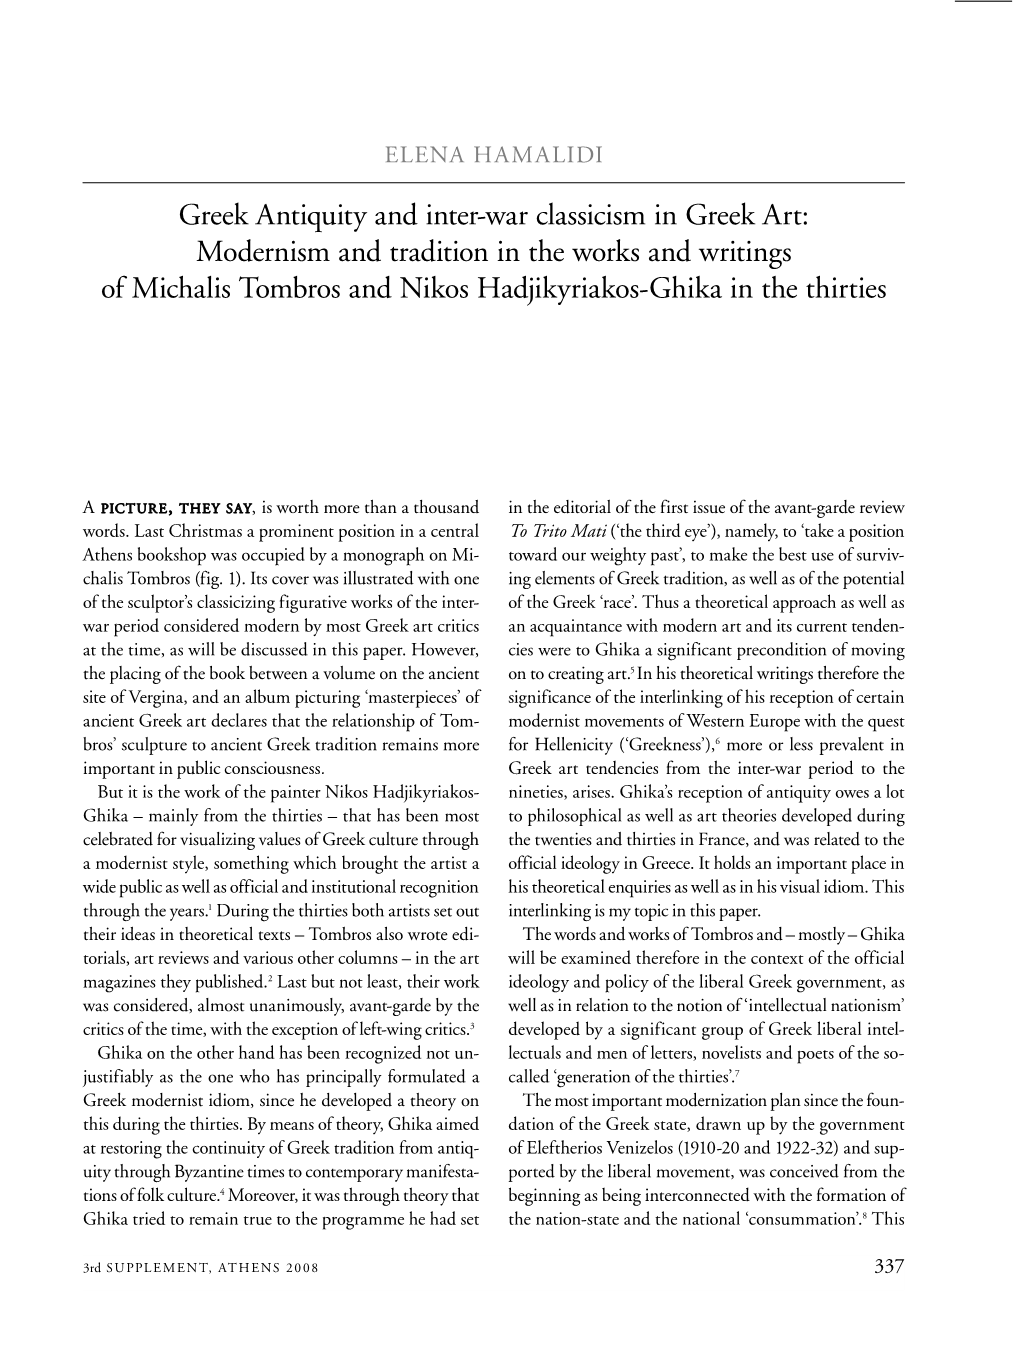 Greek Antiquity and Inter-War Classicism in Greek